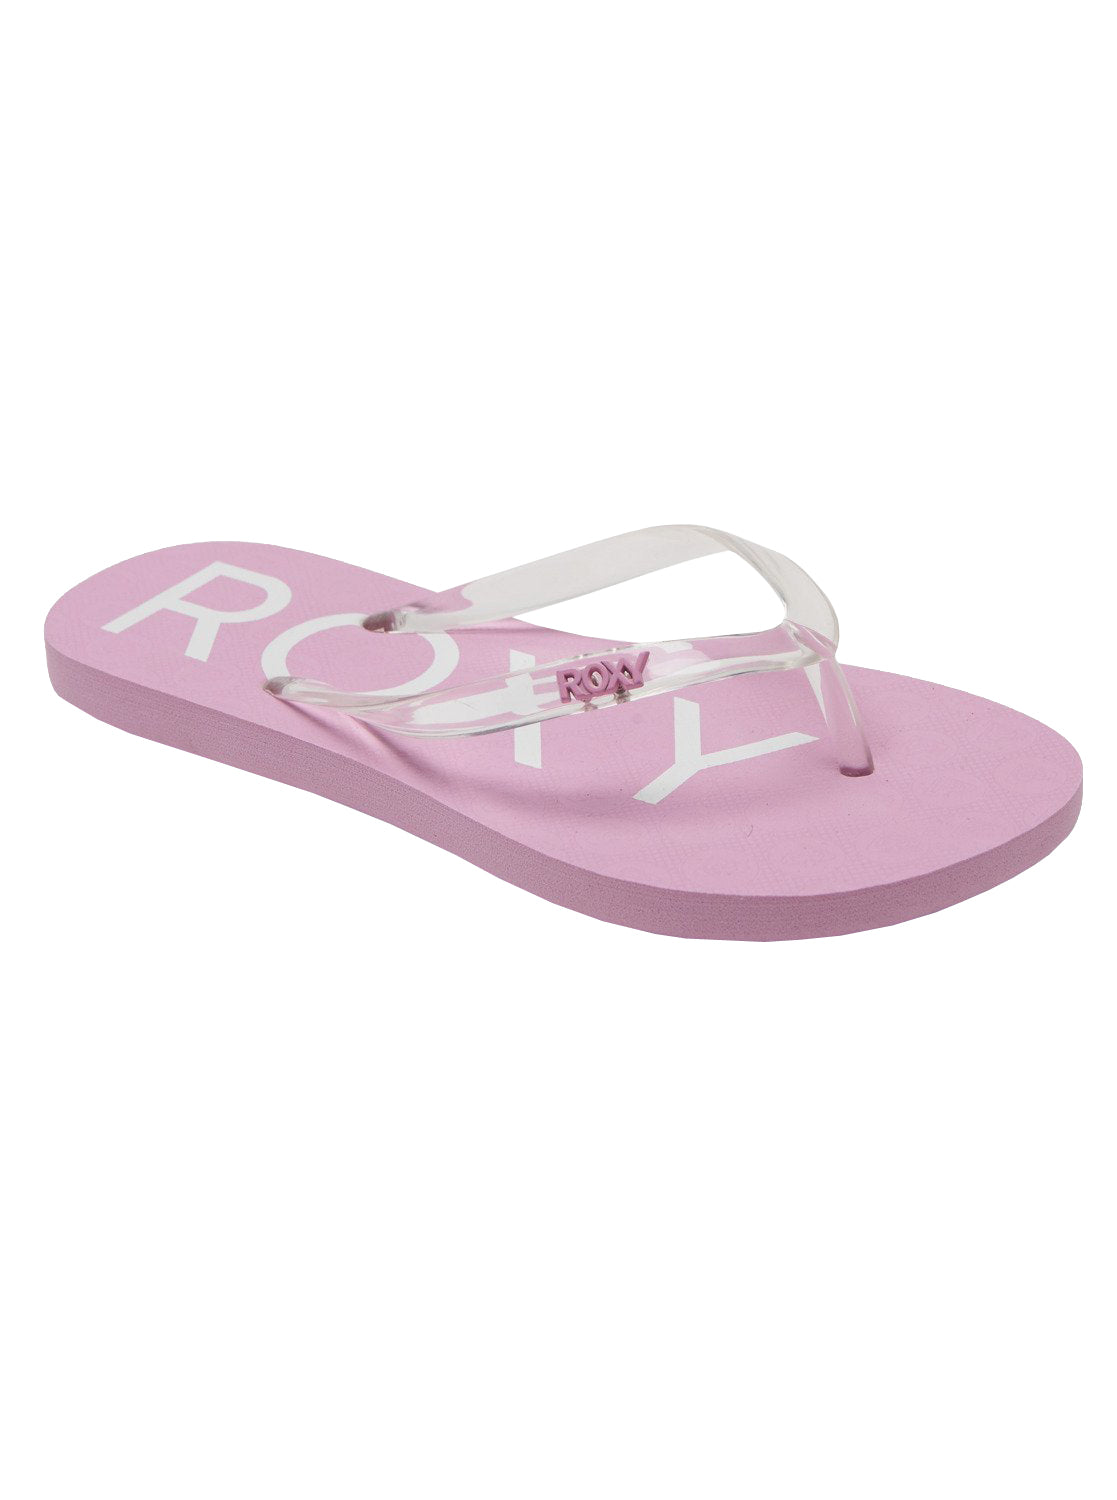 Roxy Viva Jelly Girls Sandal LRS-Lilac Rose 5 Y